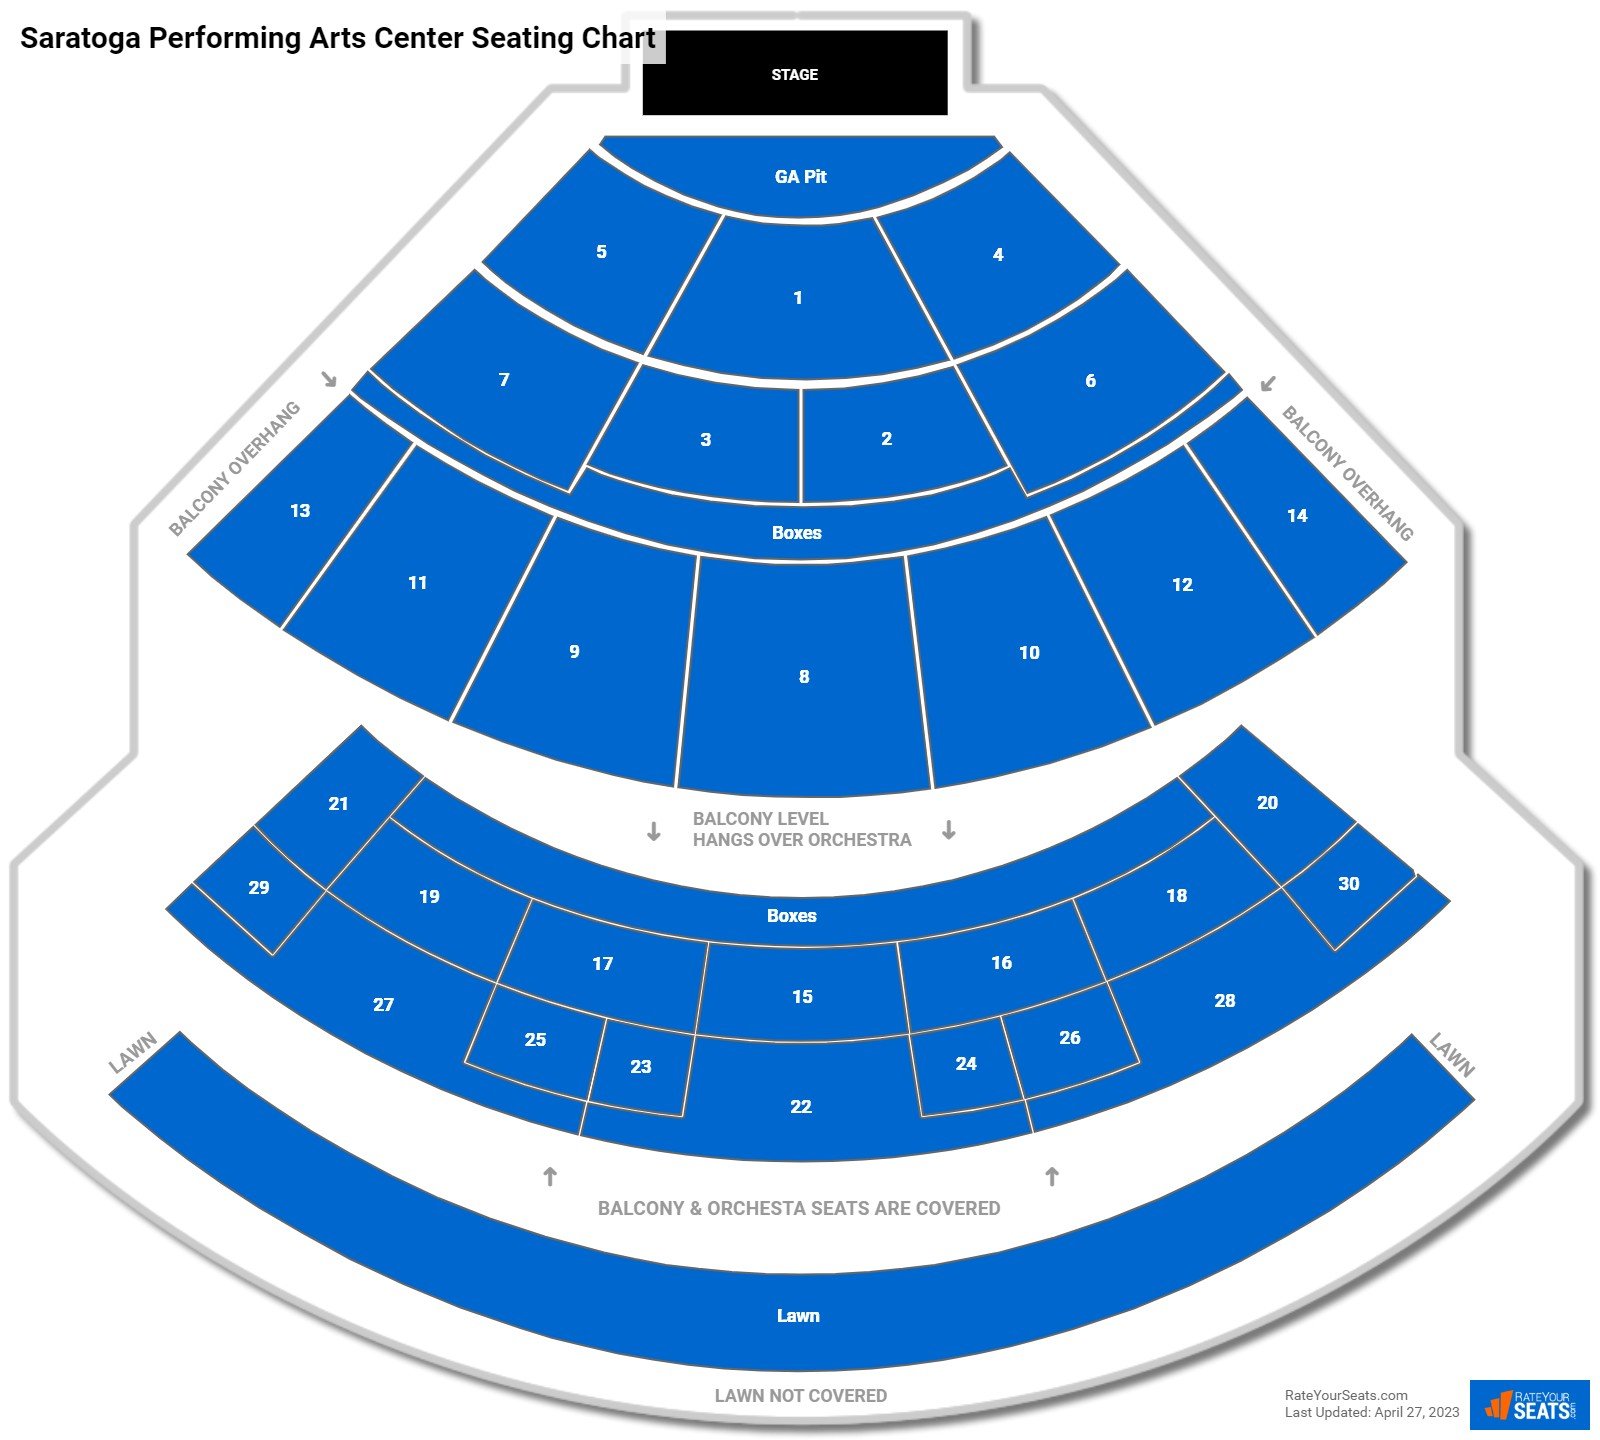 Saratoga Performing Arts Center Concert Seating Chart